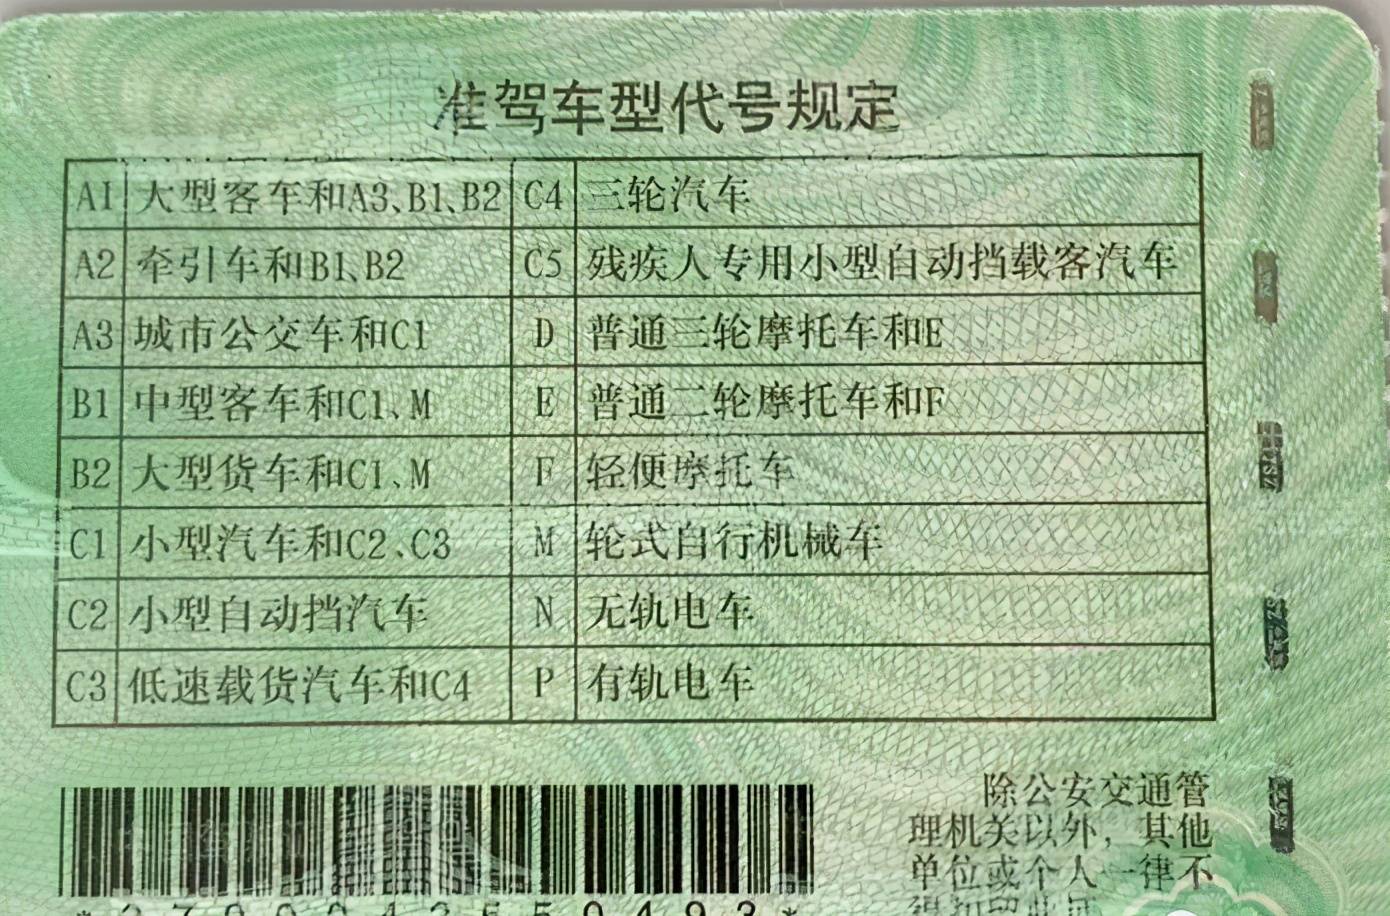 c1驾驶证申请表填写图图片